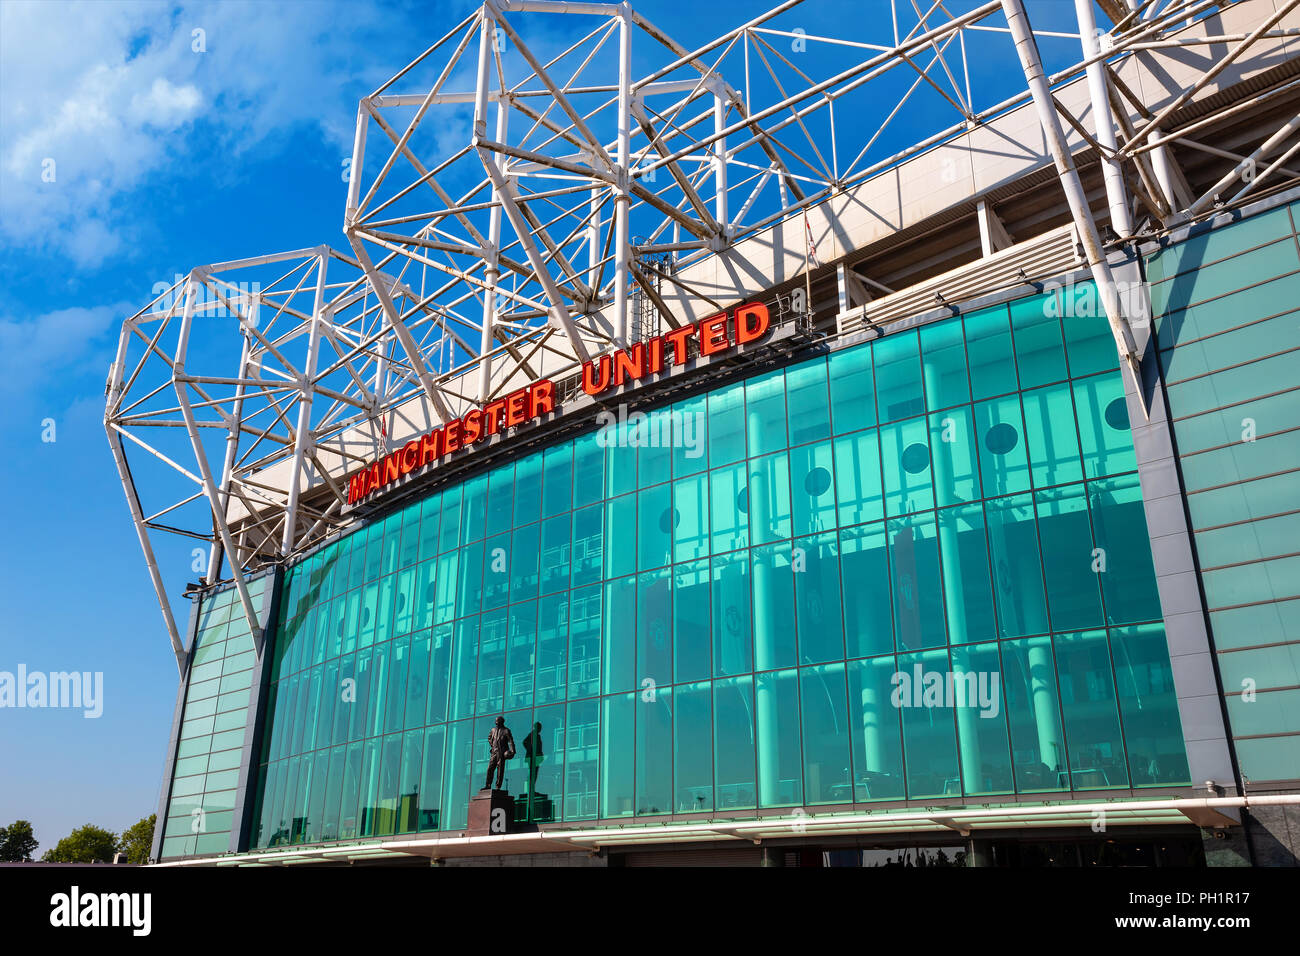 Manchester United Stadium Capacity - Dremof Bieber